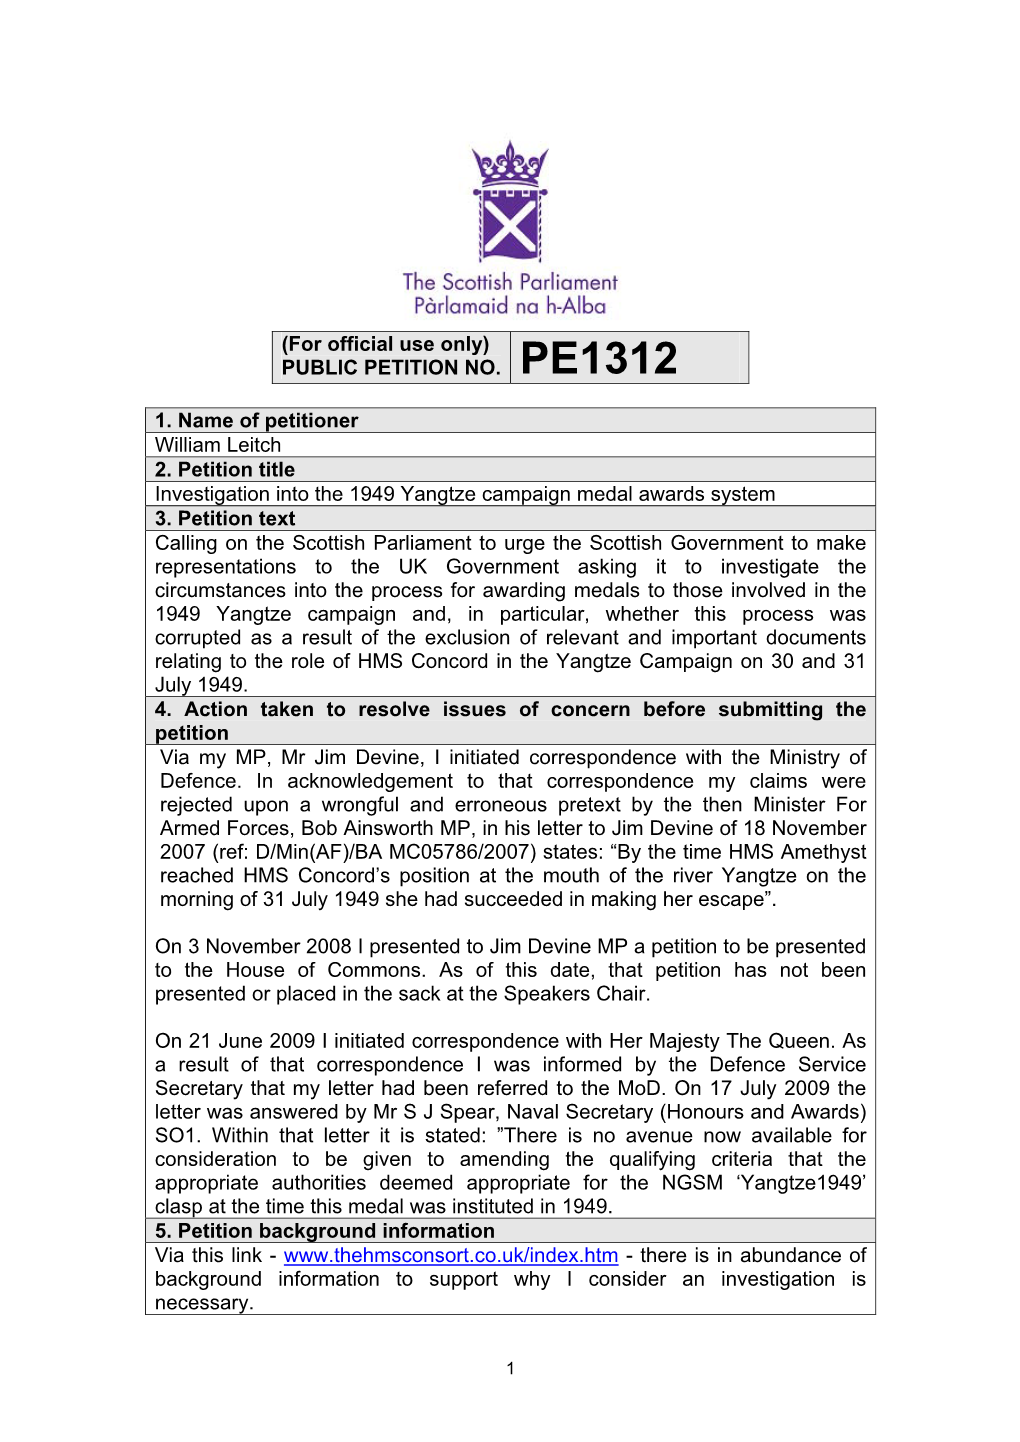 PUBLIC PETITION NO. PE1312 1. Name of Petitioner William Leitch 2